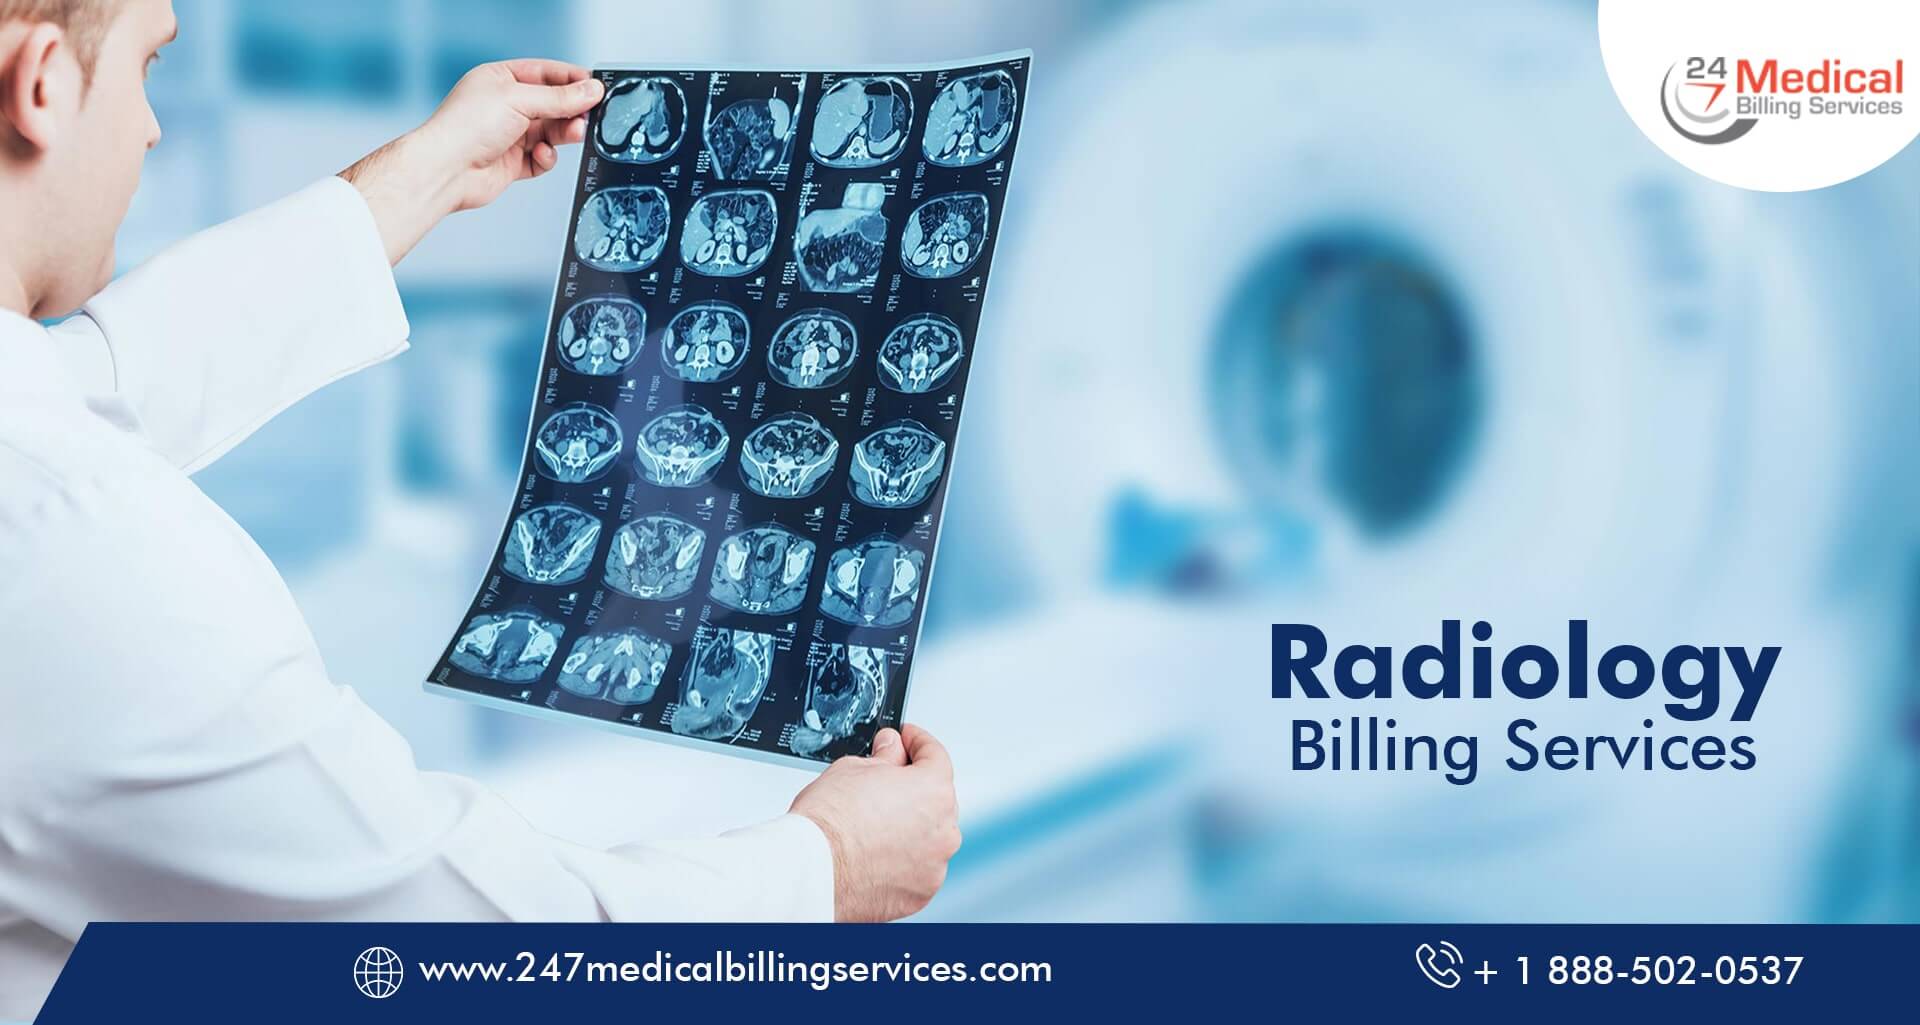 Radiology Billing Services in Sacramento, California (CA) - 24/7 Medical Billing Services